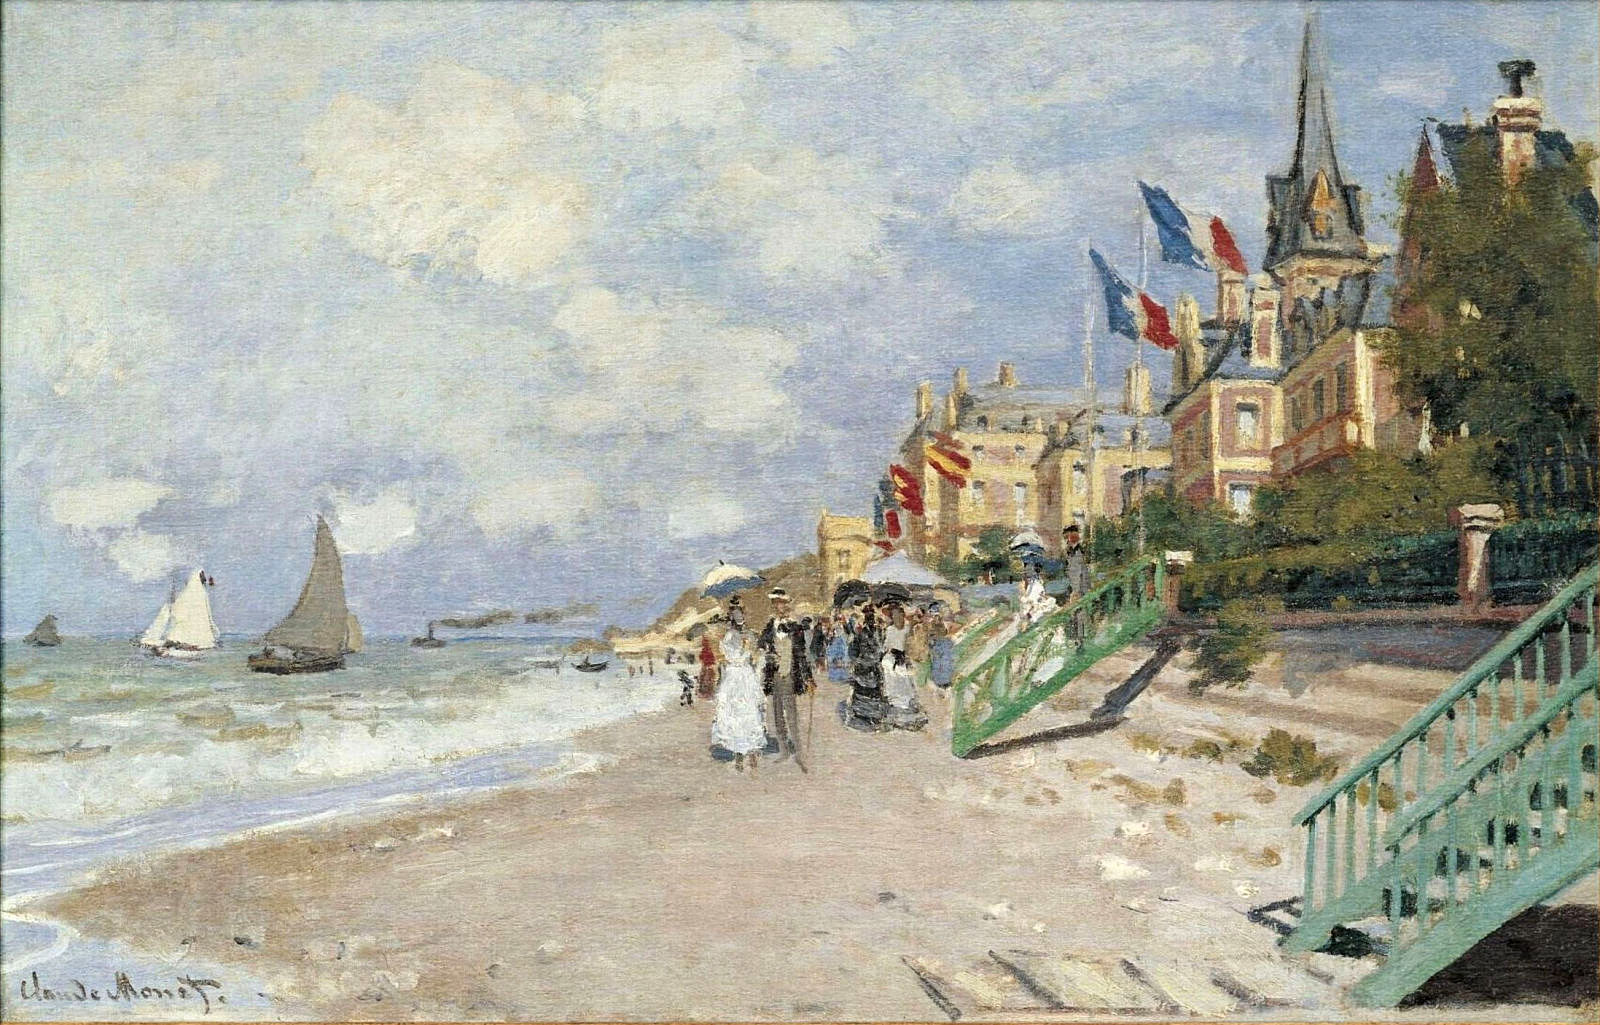 Claude+Monet-1840-1926 (735).jpg